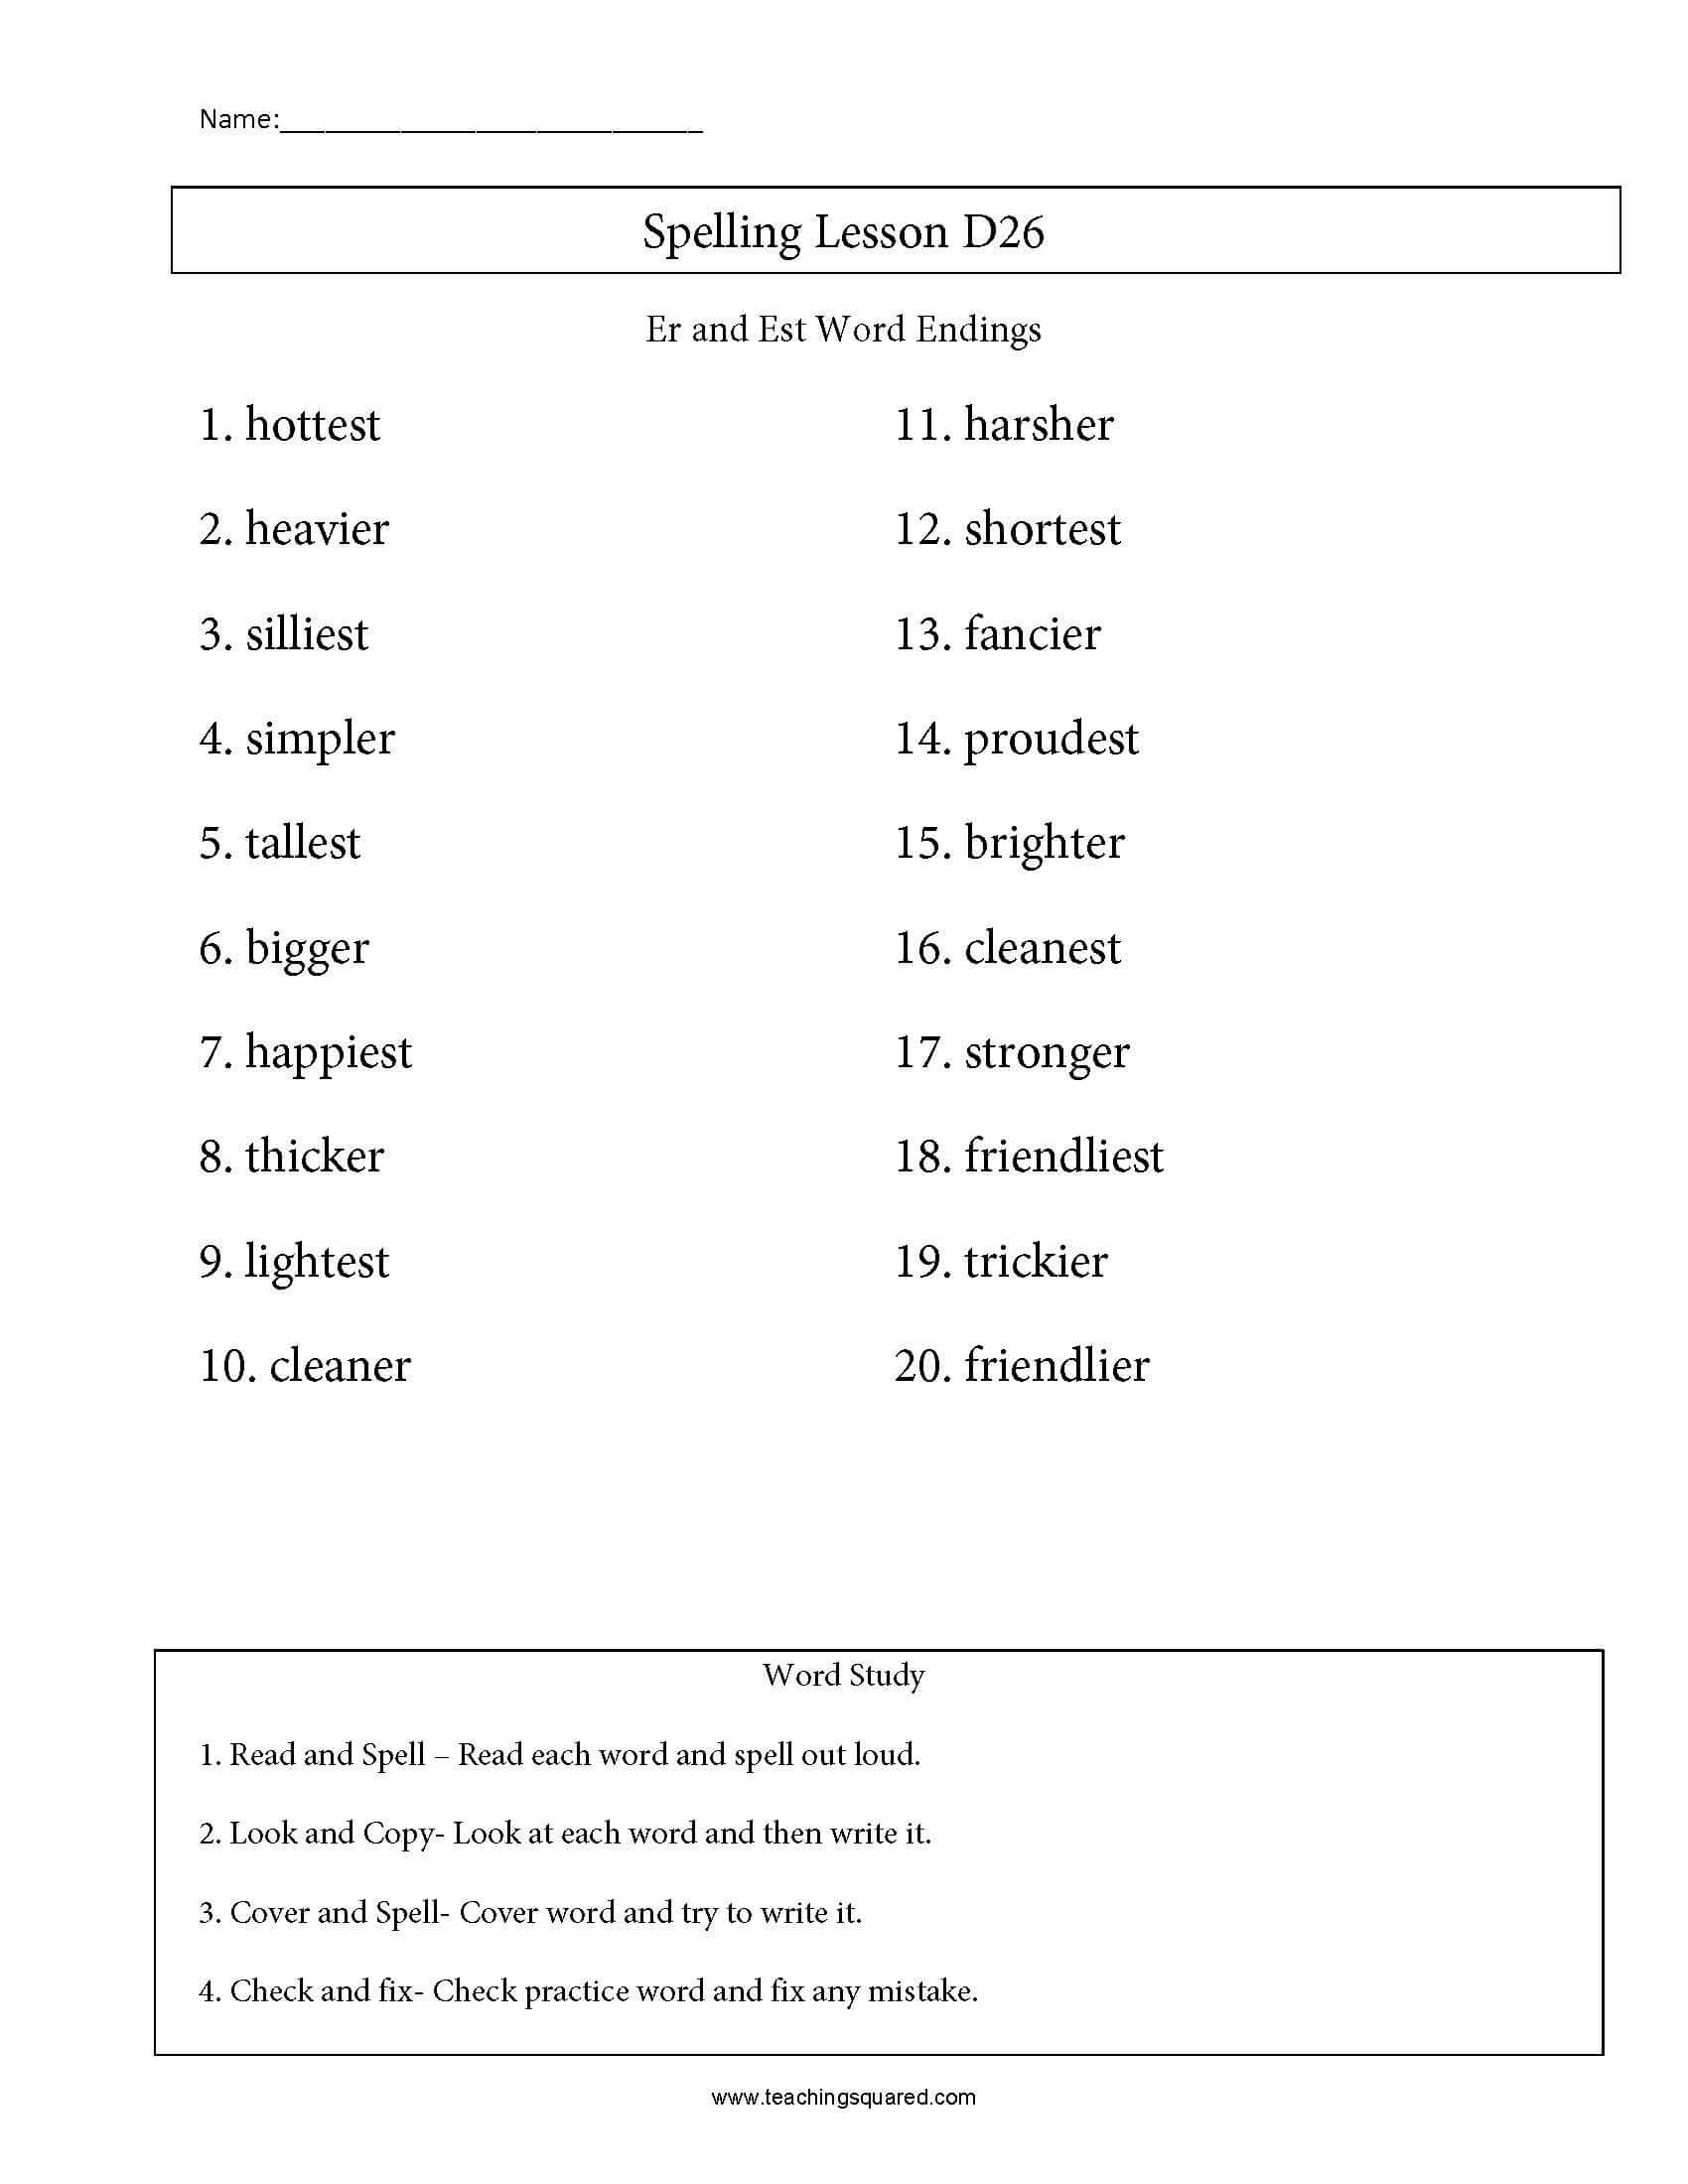 Er Est Worksheets 2nd Grade Spelling List D26 Er and Est Word Endings Teaching Squared